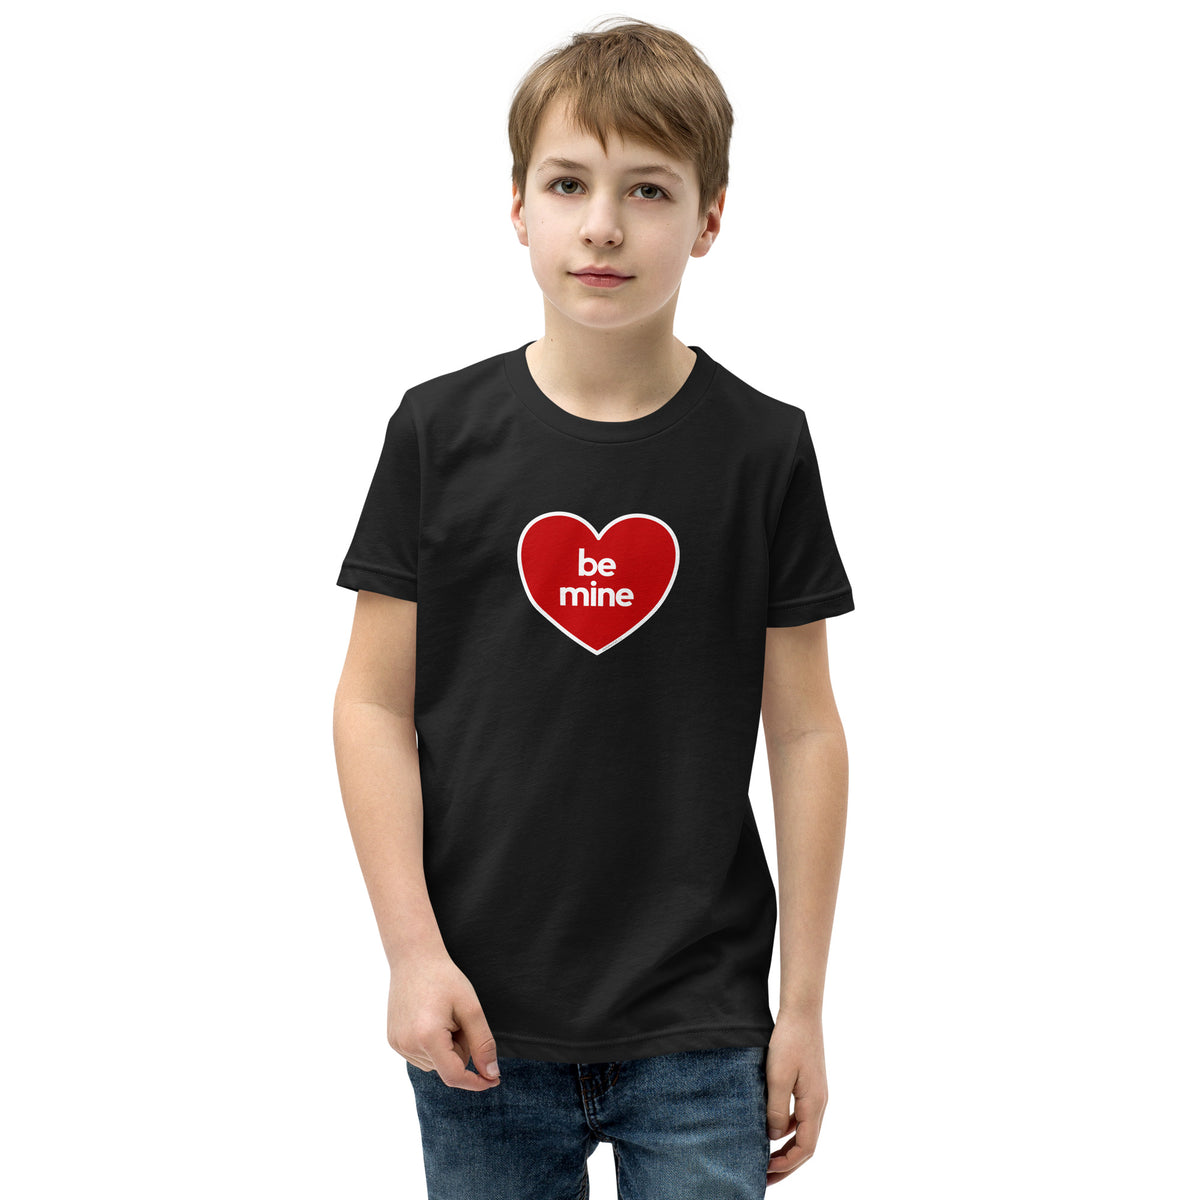 Be Mine Heart Kids Valentine’s Day T-Shirt